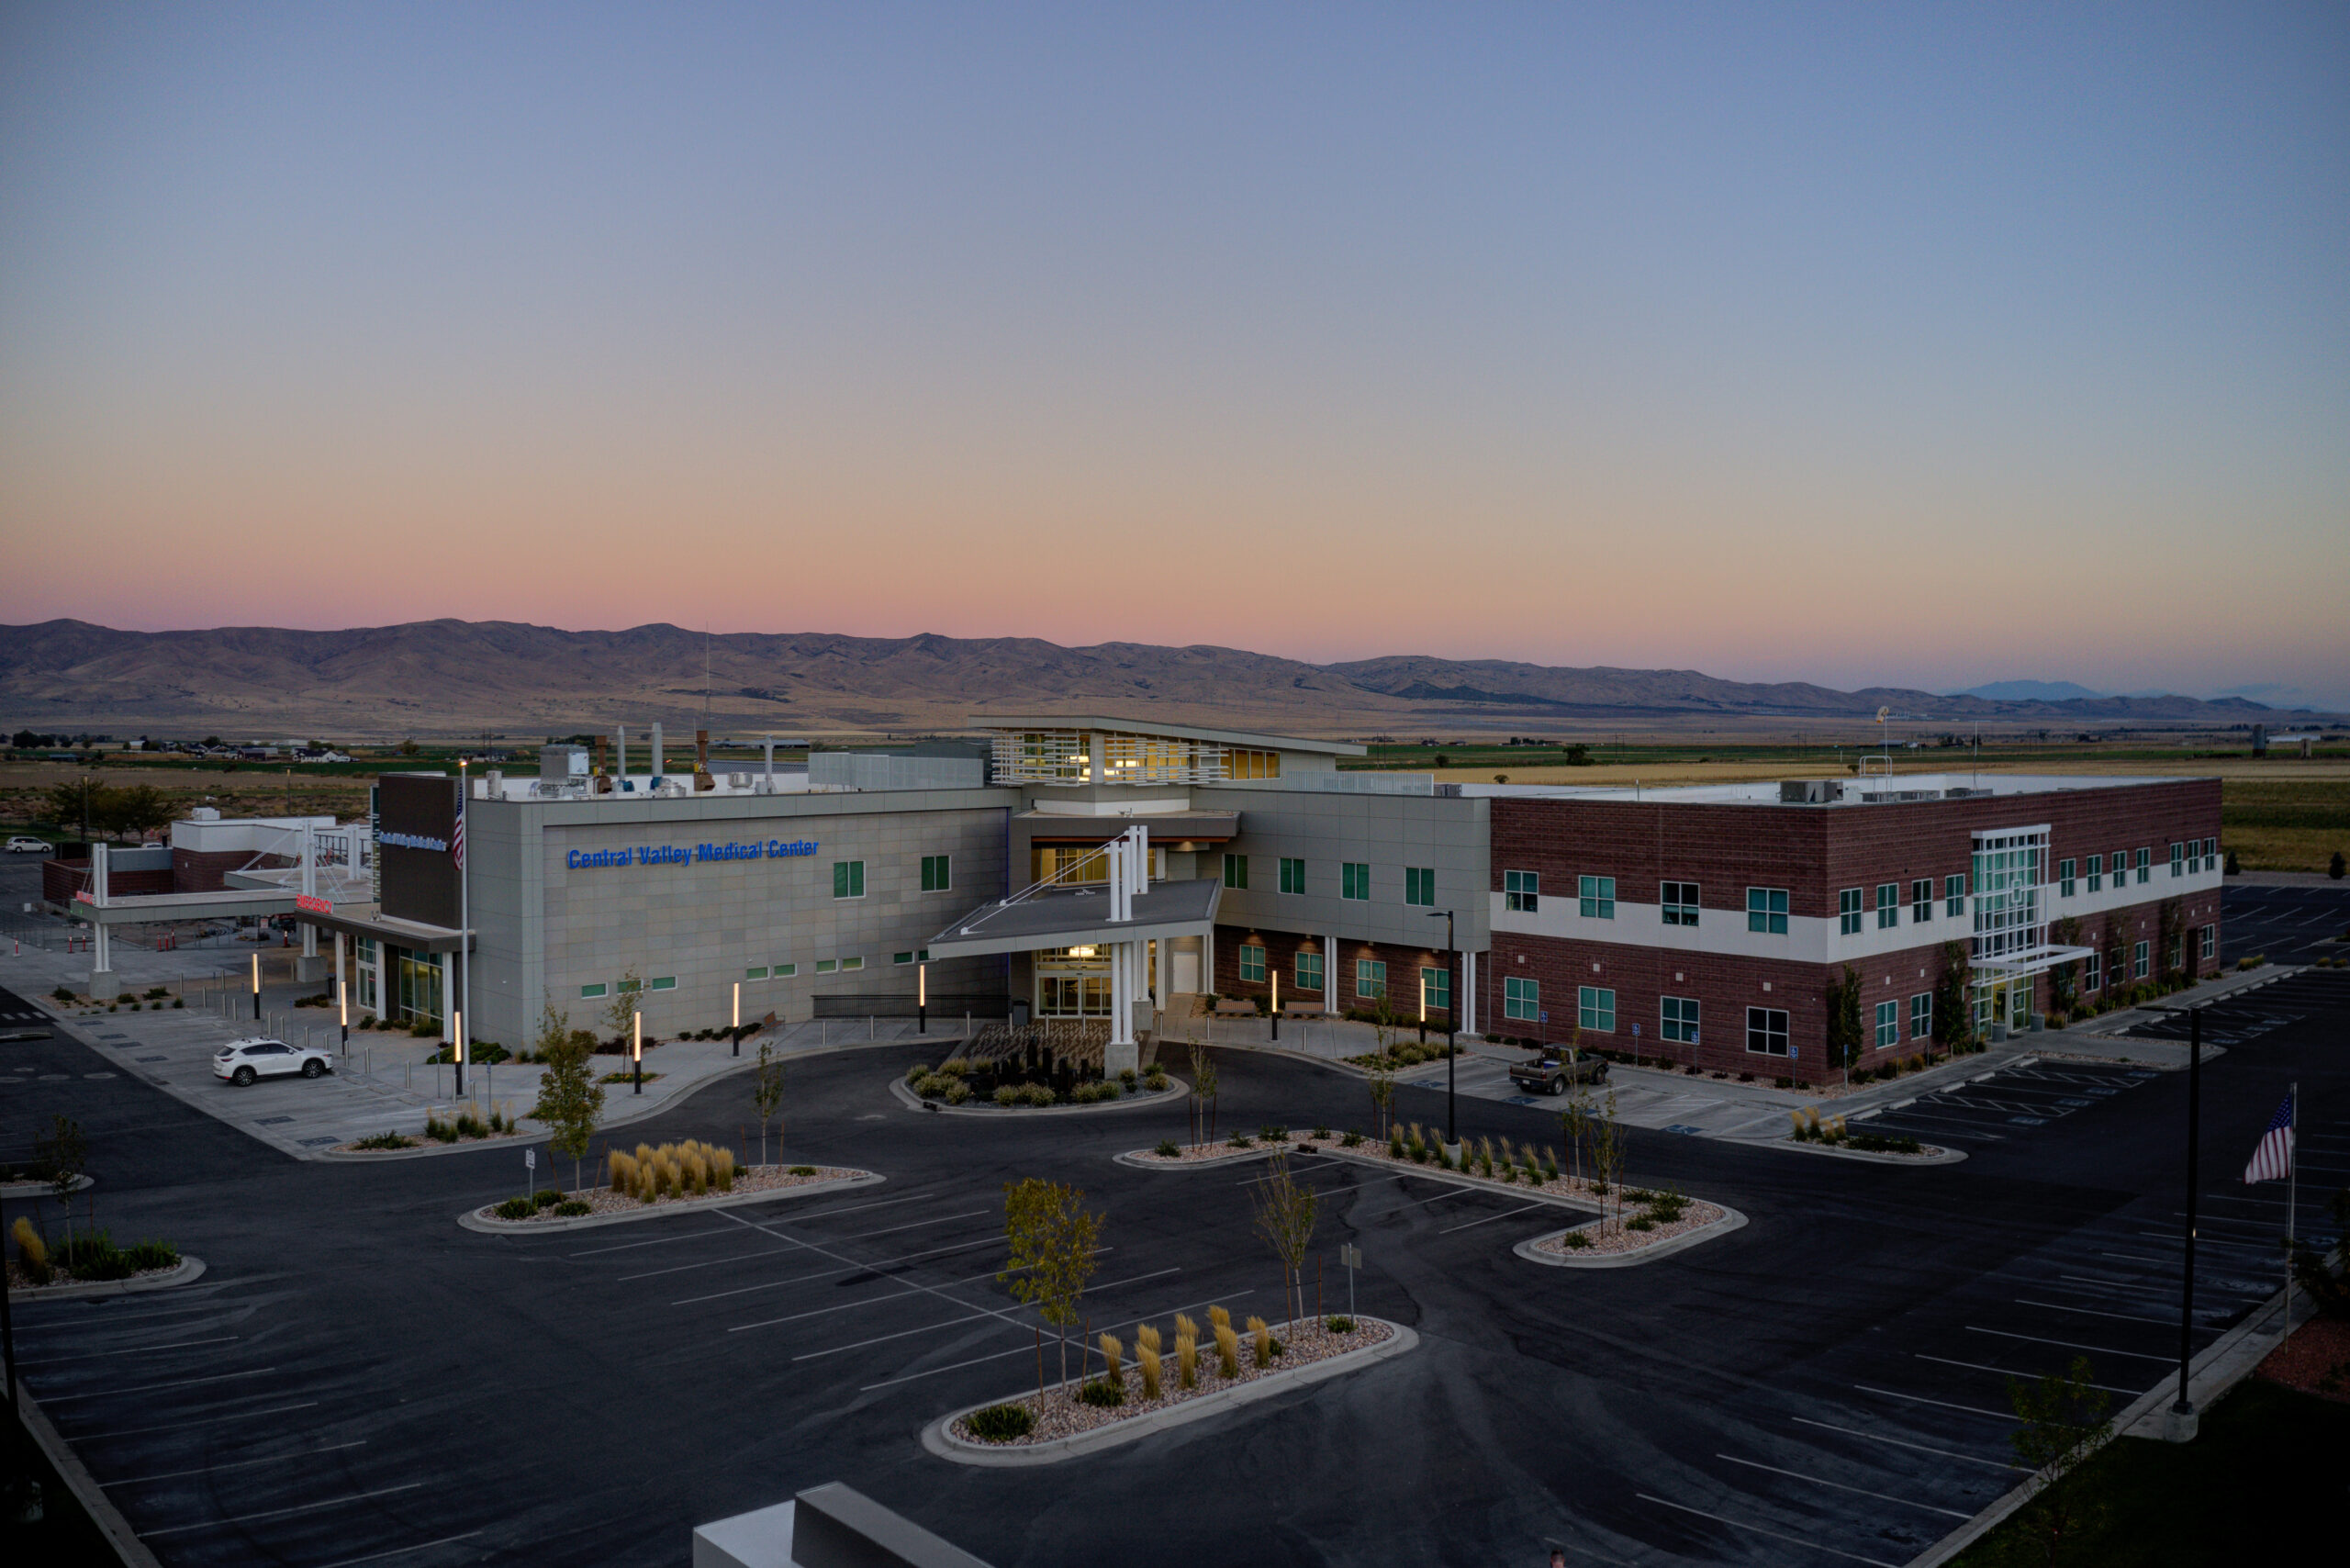 Central Valley Medical Center PHASE V ADDITION AND RENOVATION